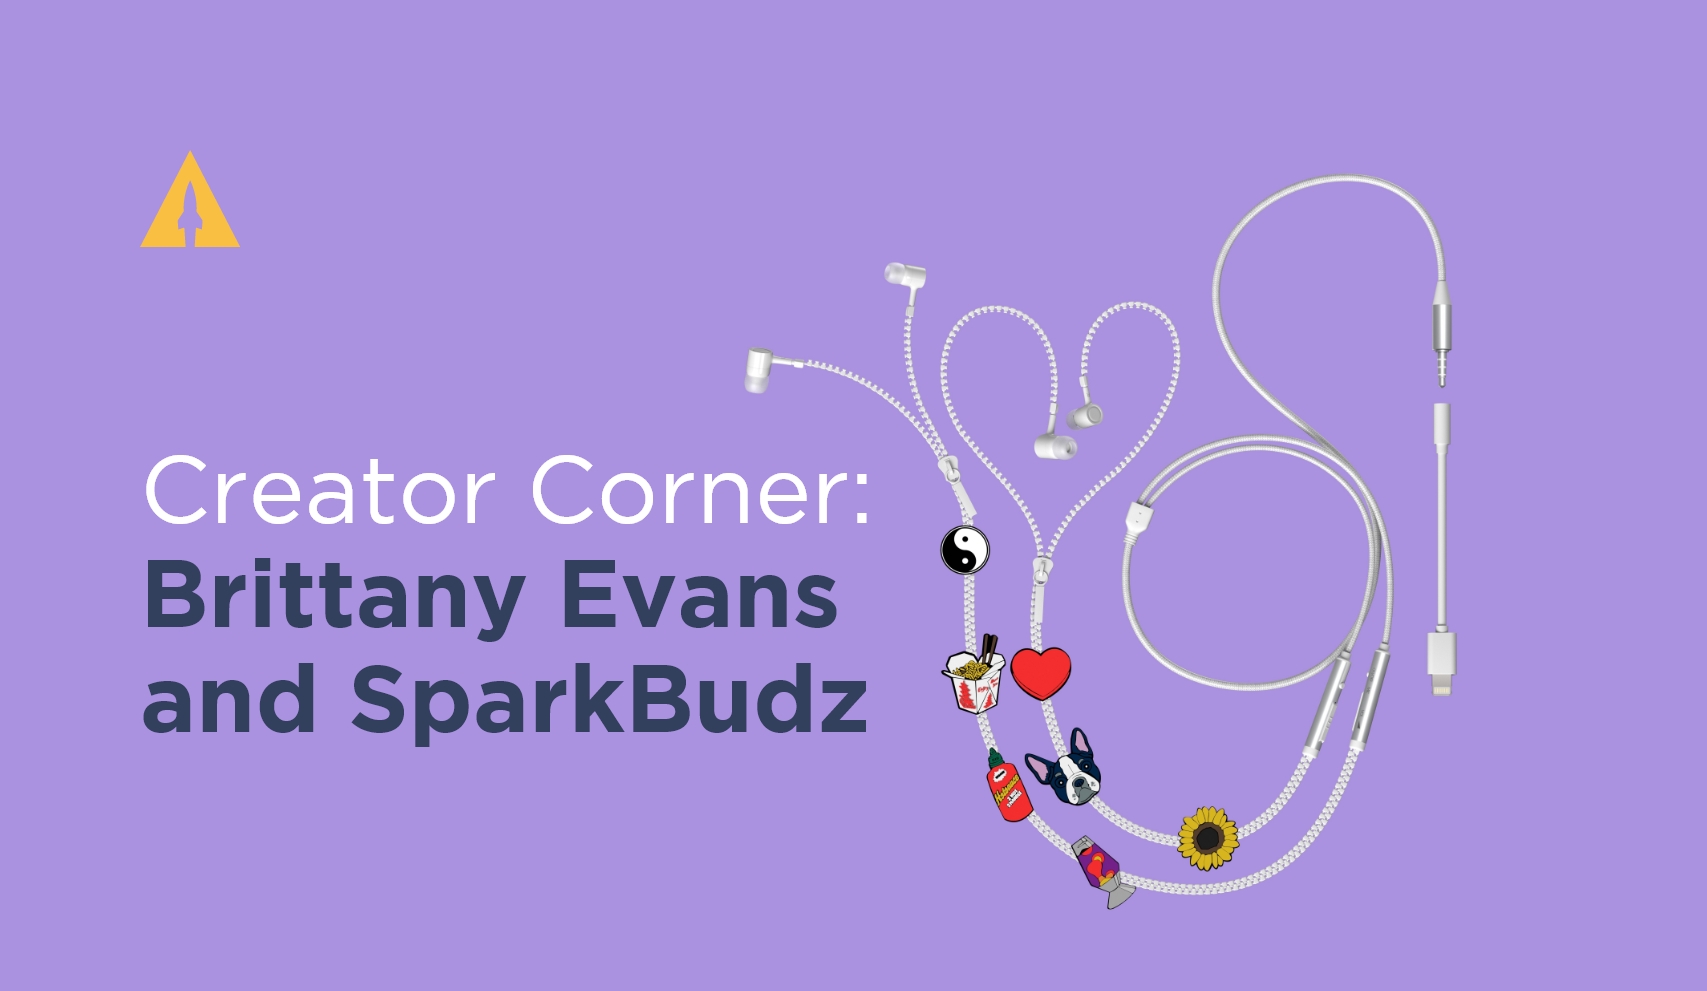 Creator Corner: Brittany Evans and SparkBudz